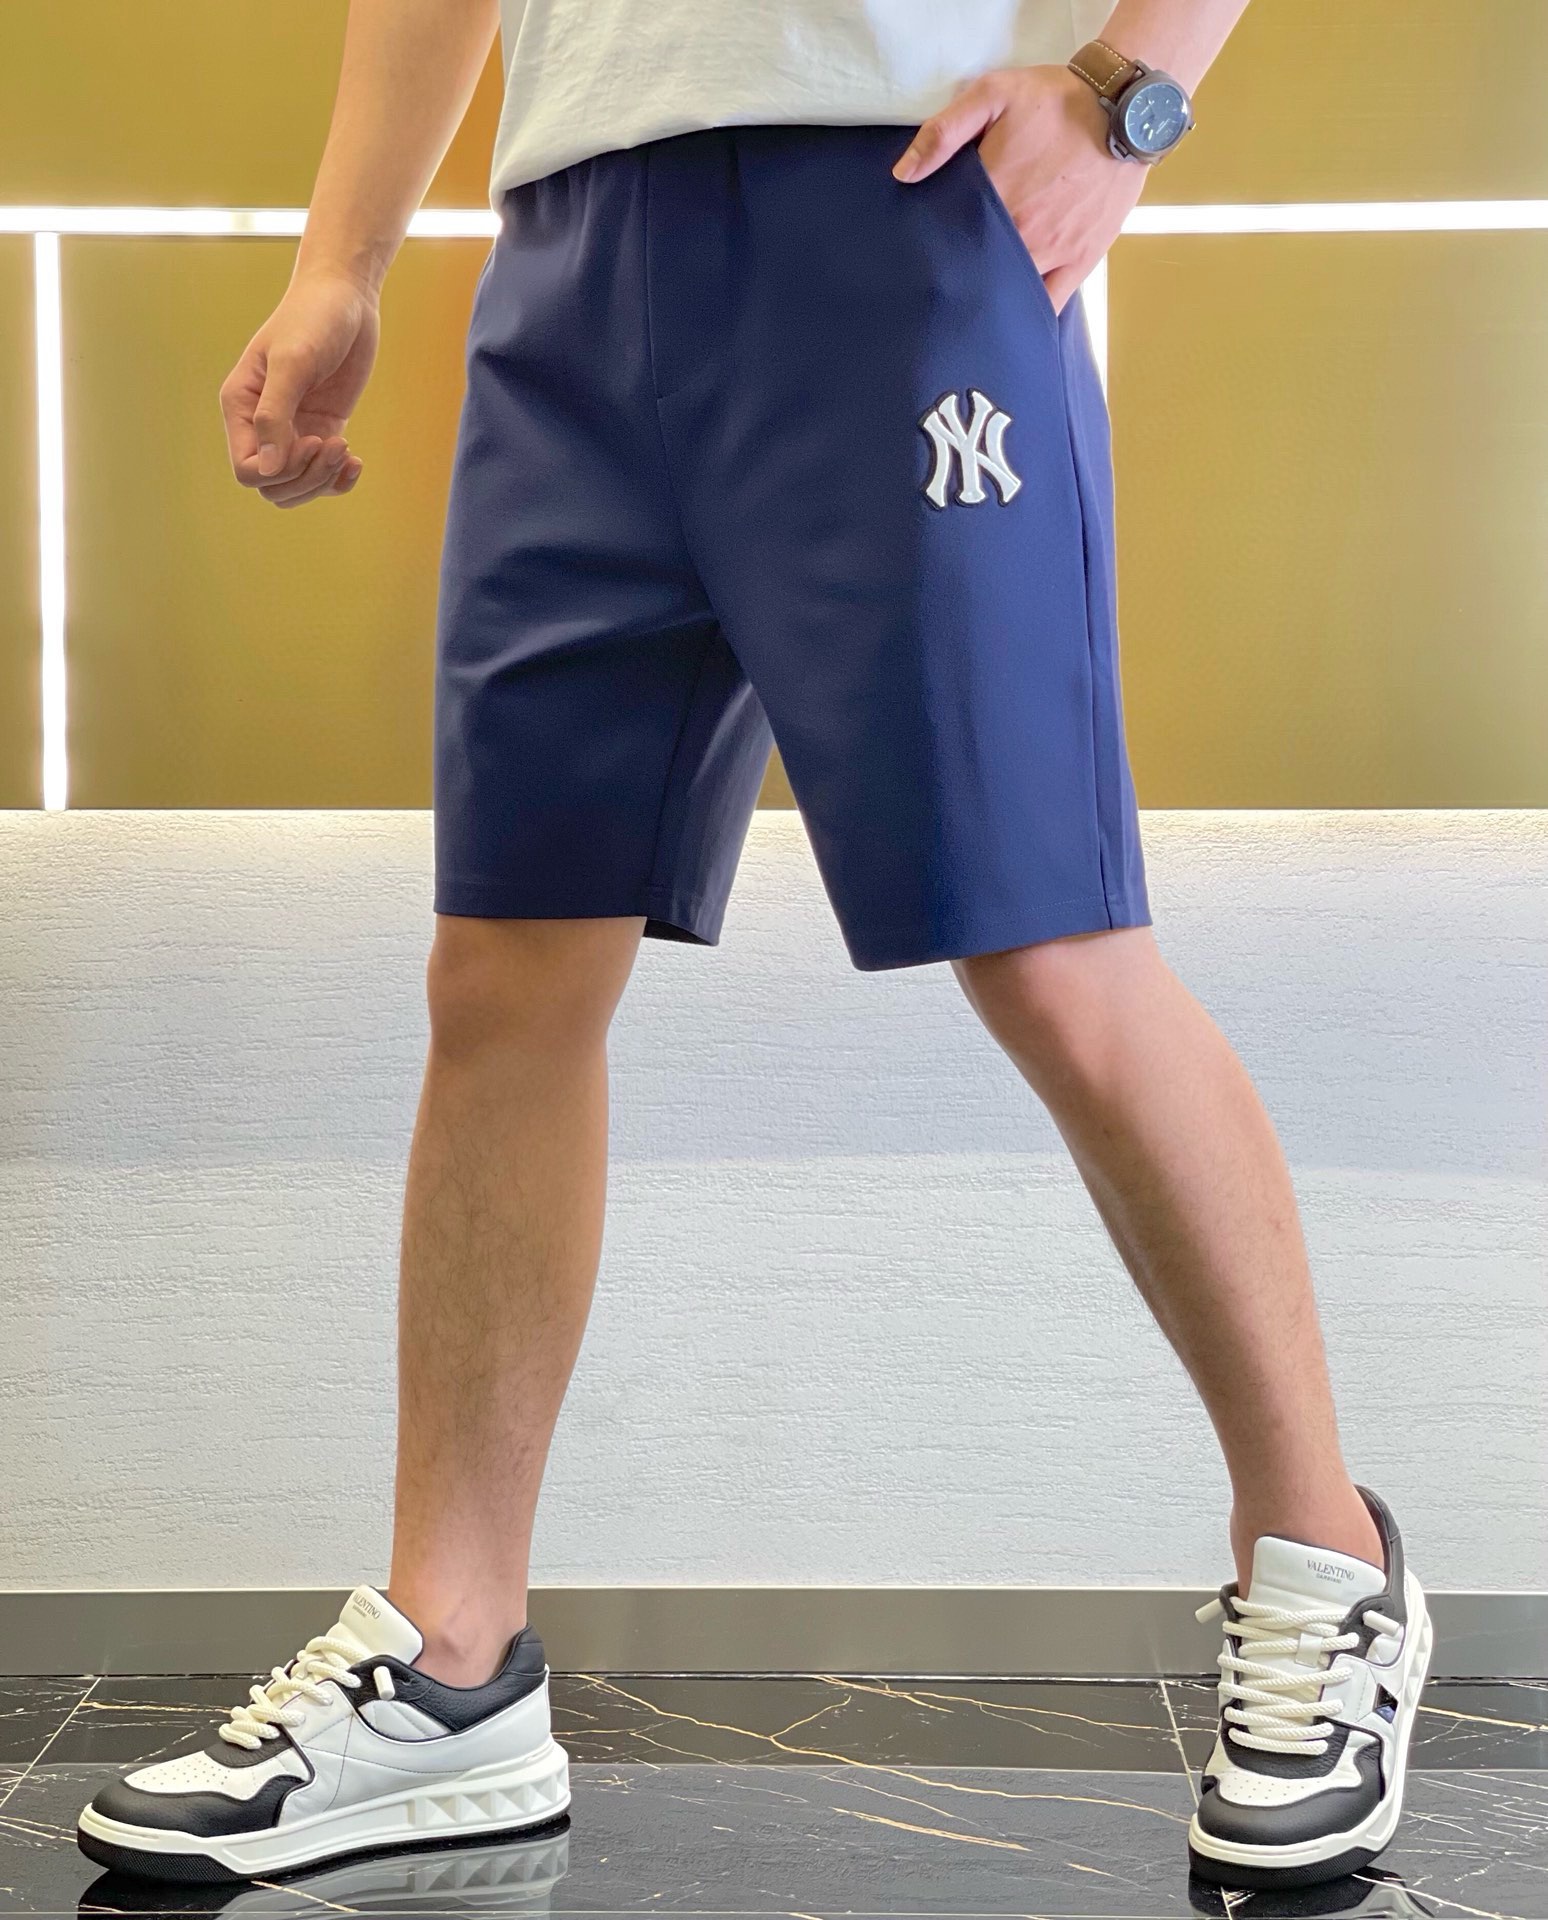 ️重力出击你最闪耀！！NY24s夏季男士休闲五分裤....为经典打CALL为升级致敬！！！绝对是N粉忍不